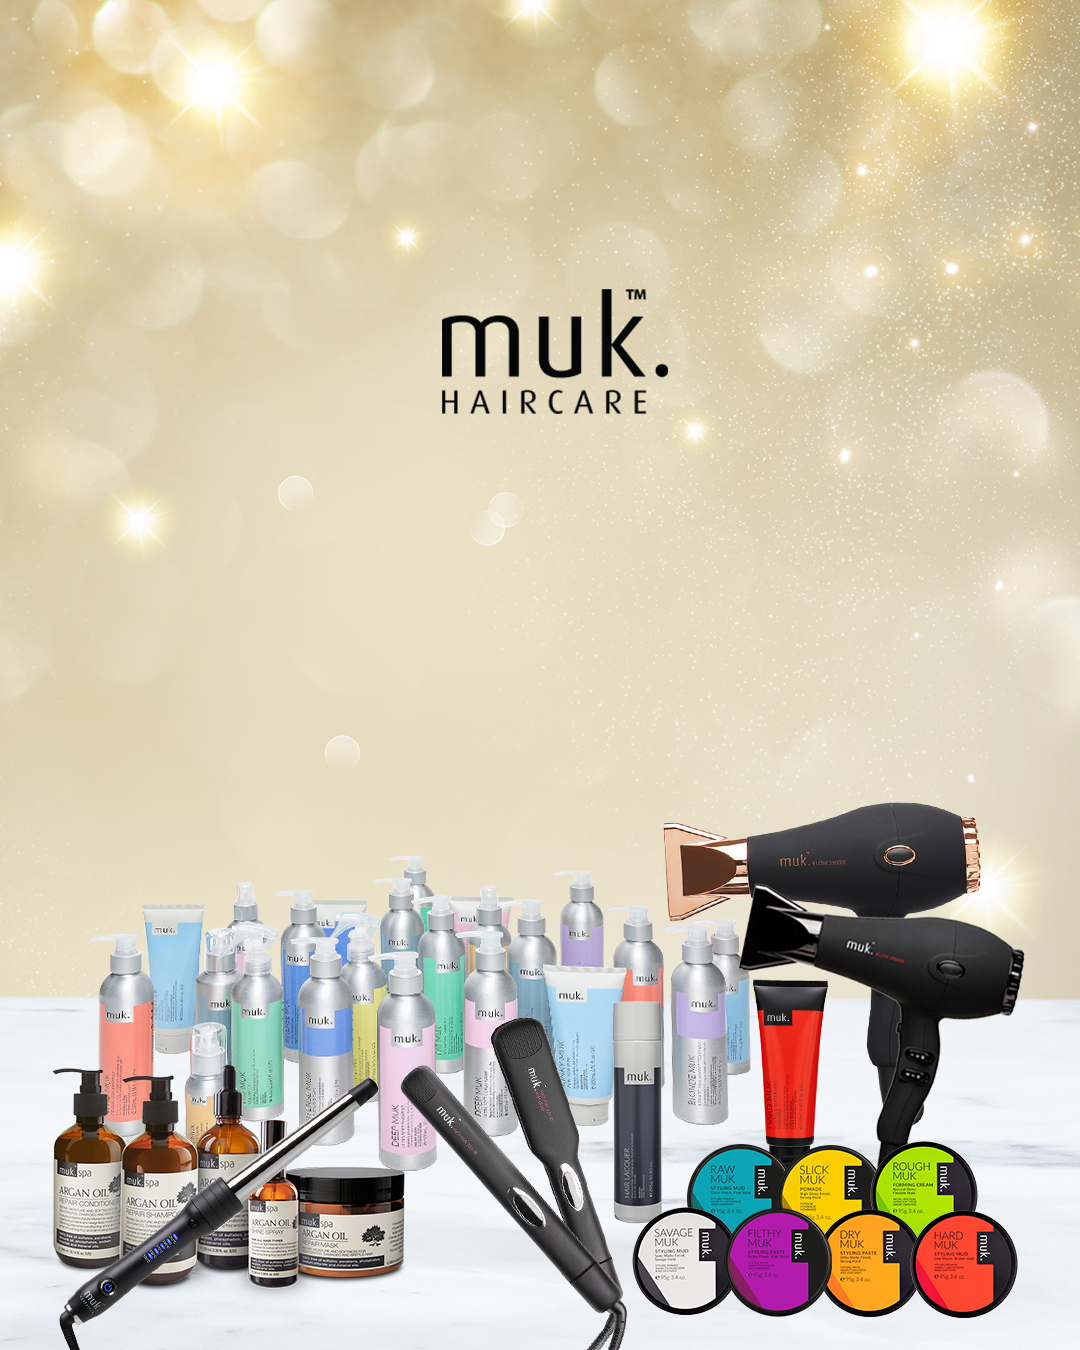 muk hair products, verzorging, styling, muk hair